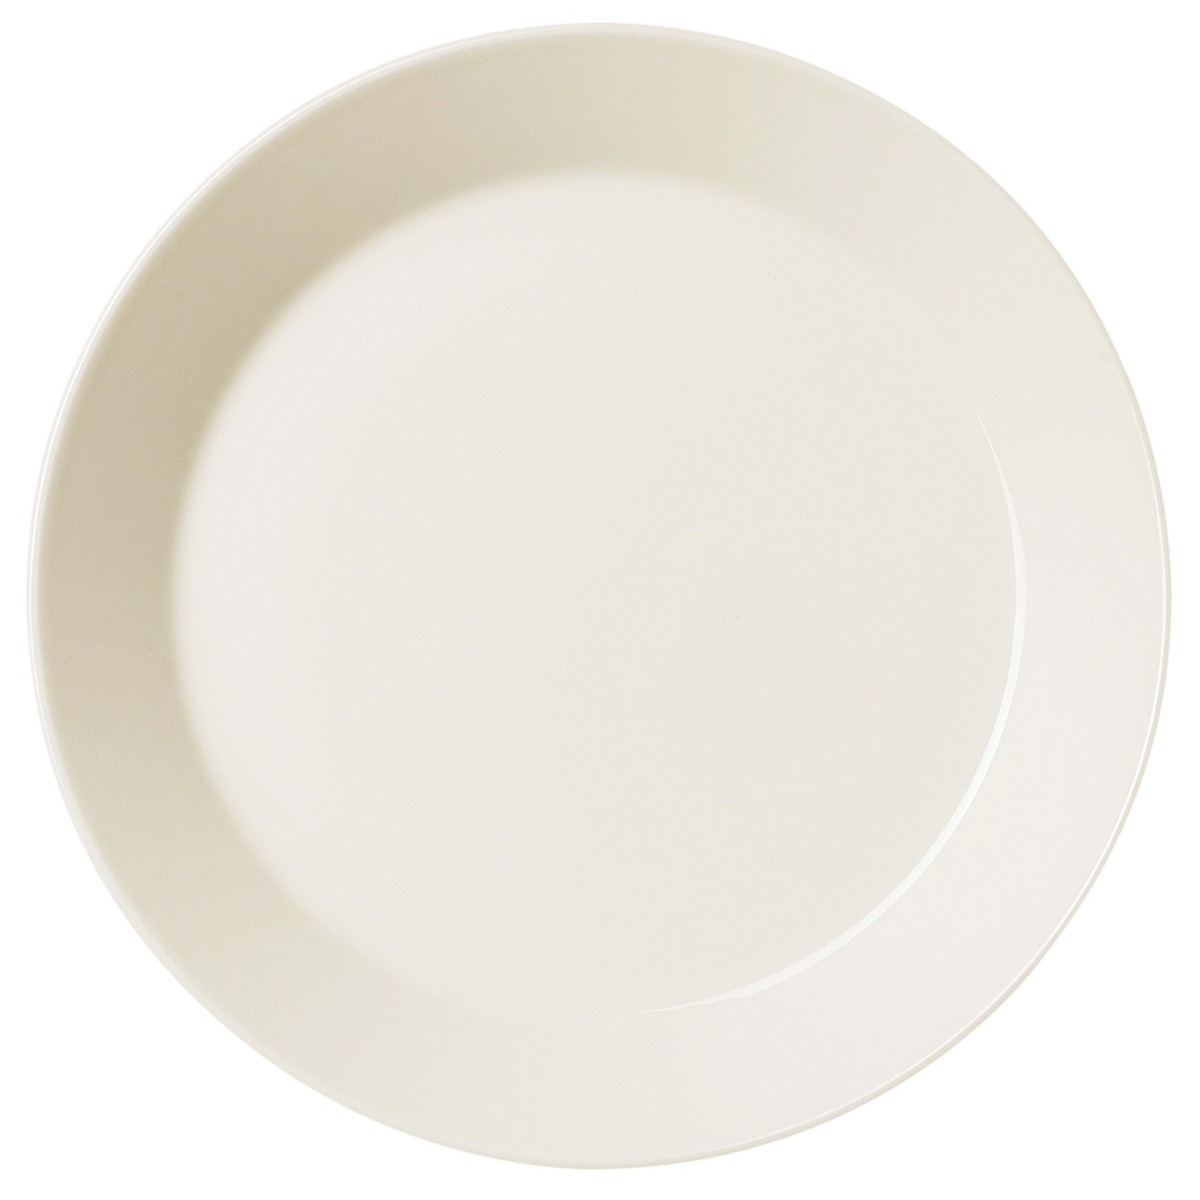 Ø17cm - Teema plate - white - 1005919